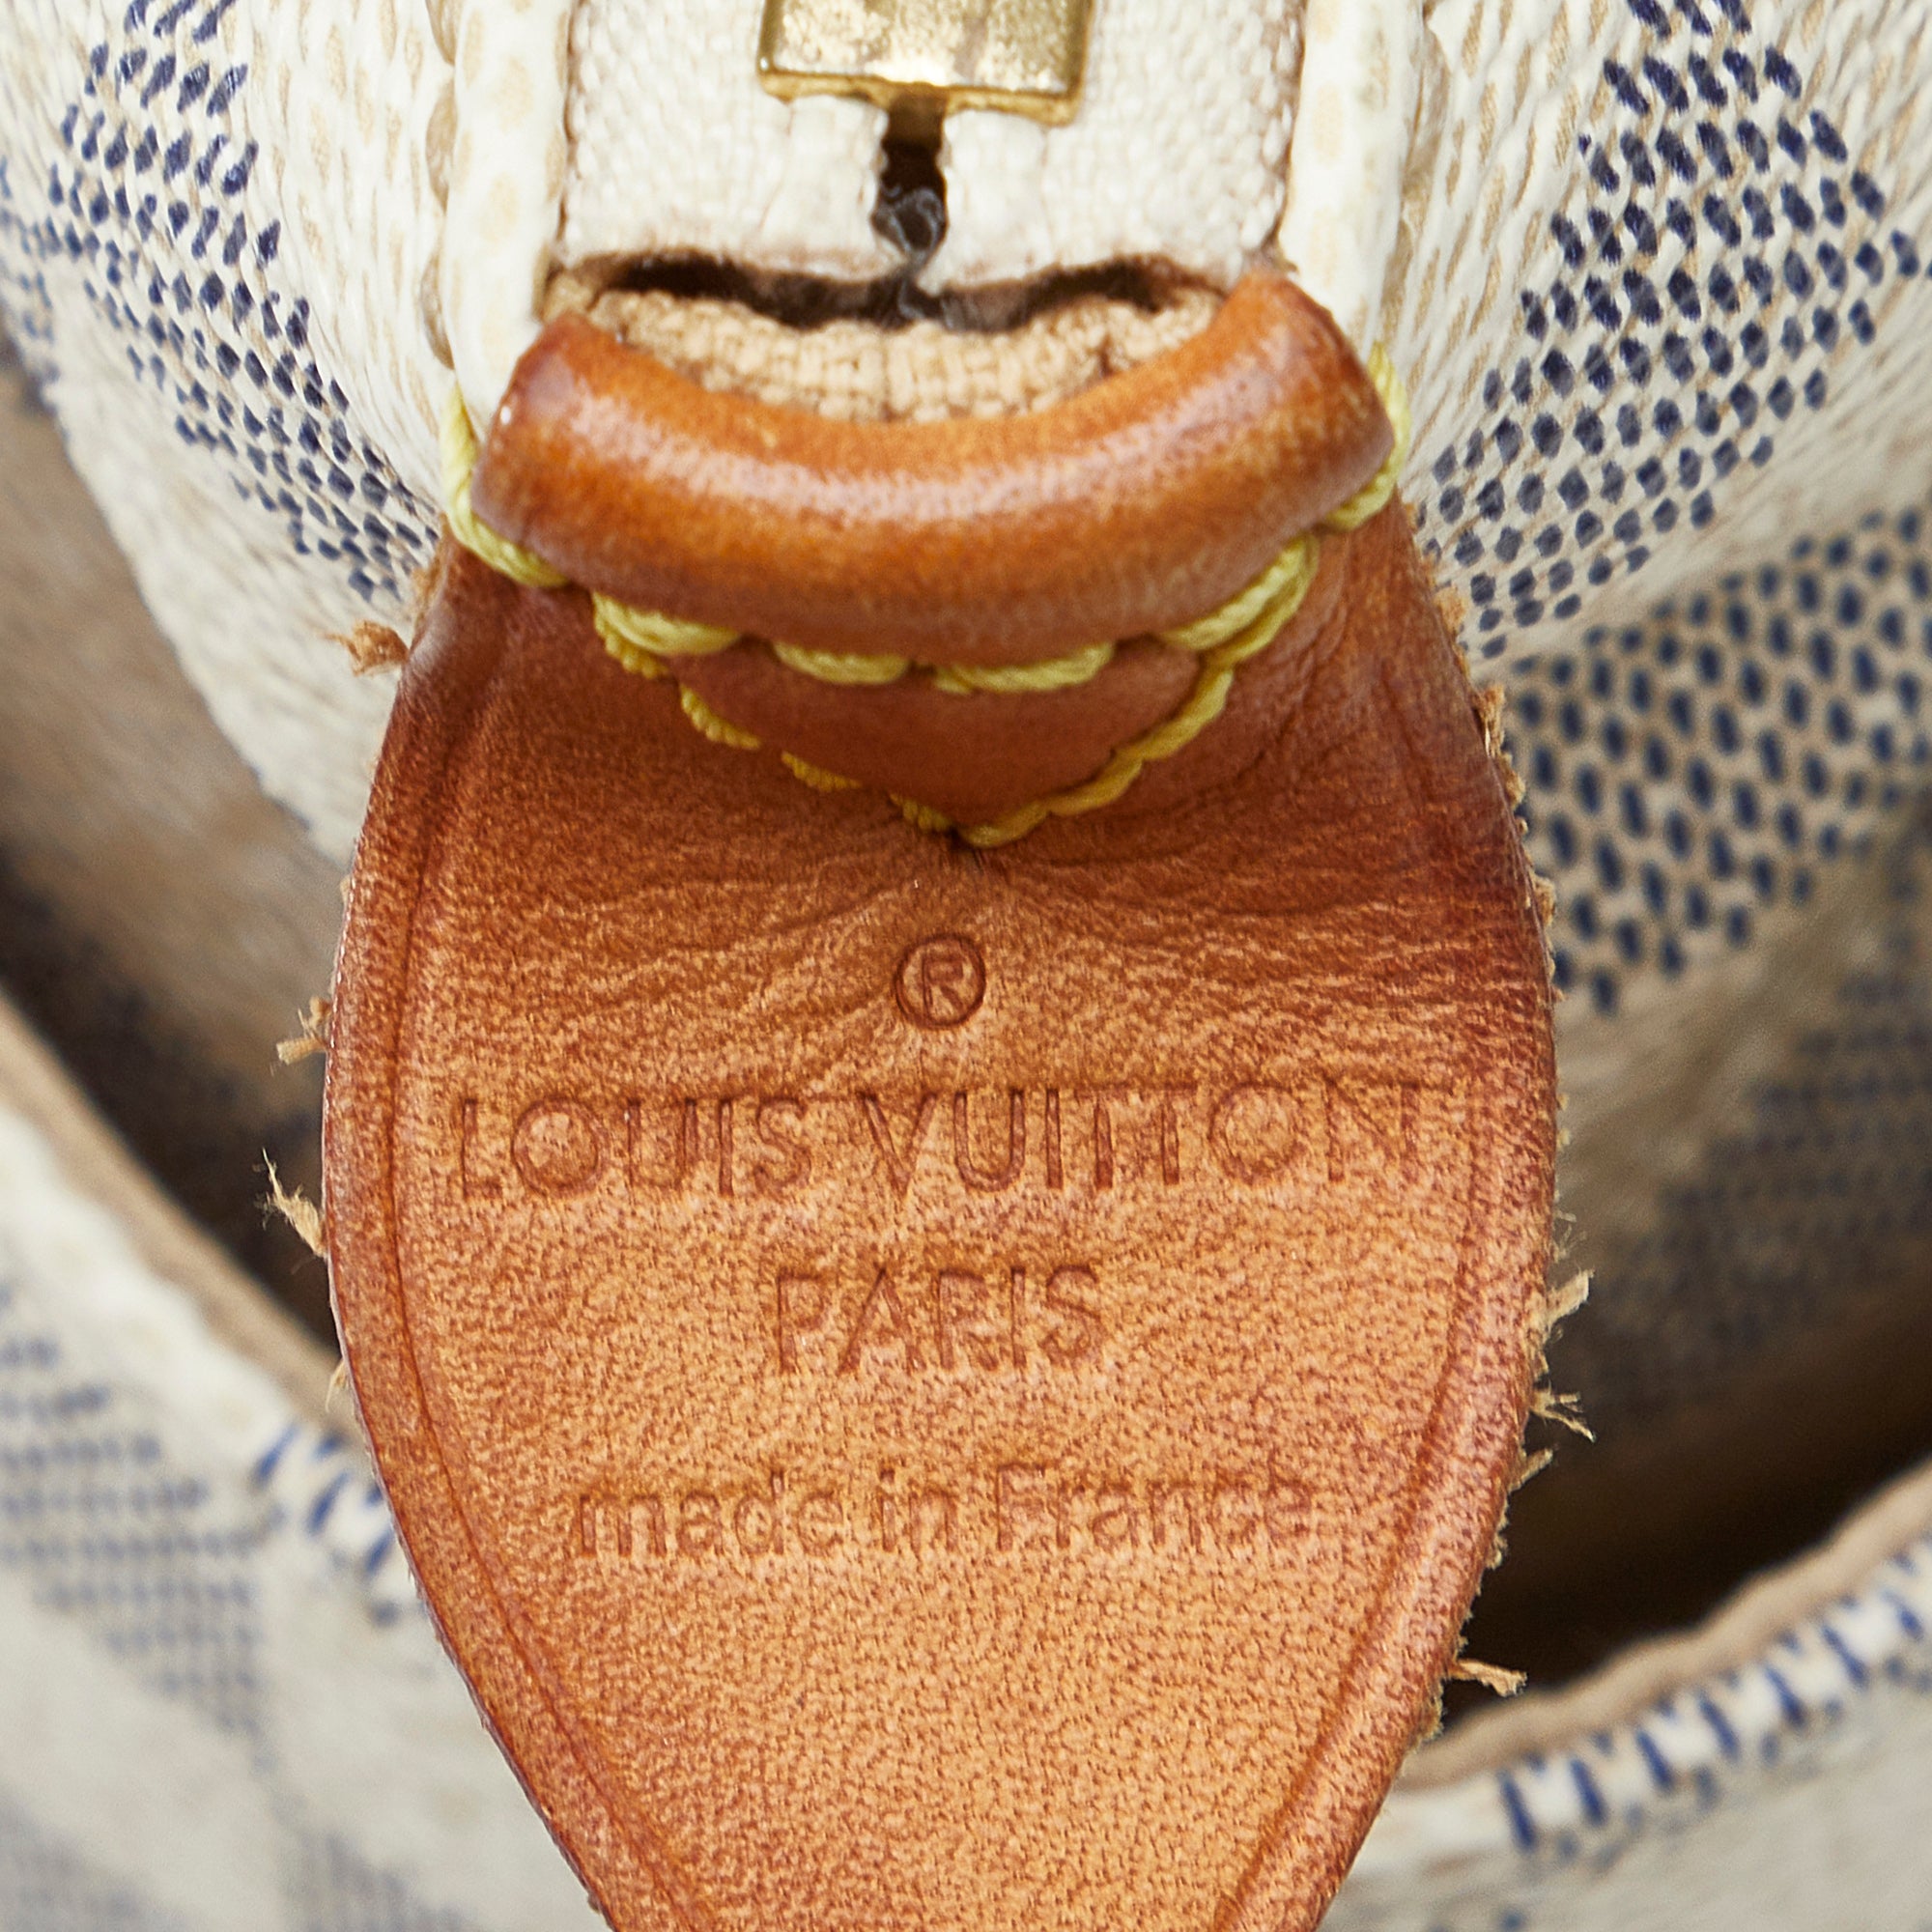 How to Spot Authentiv Louis Vuitton White Damier Azur Berkeley Handbag 